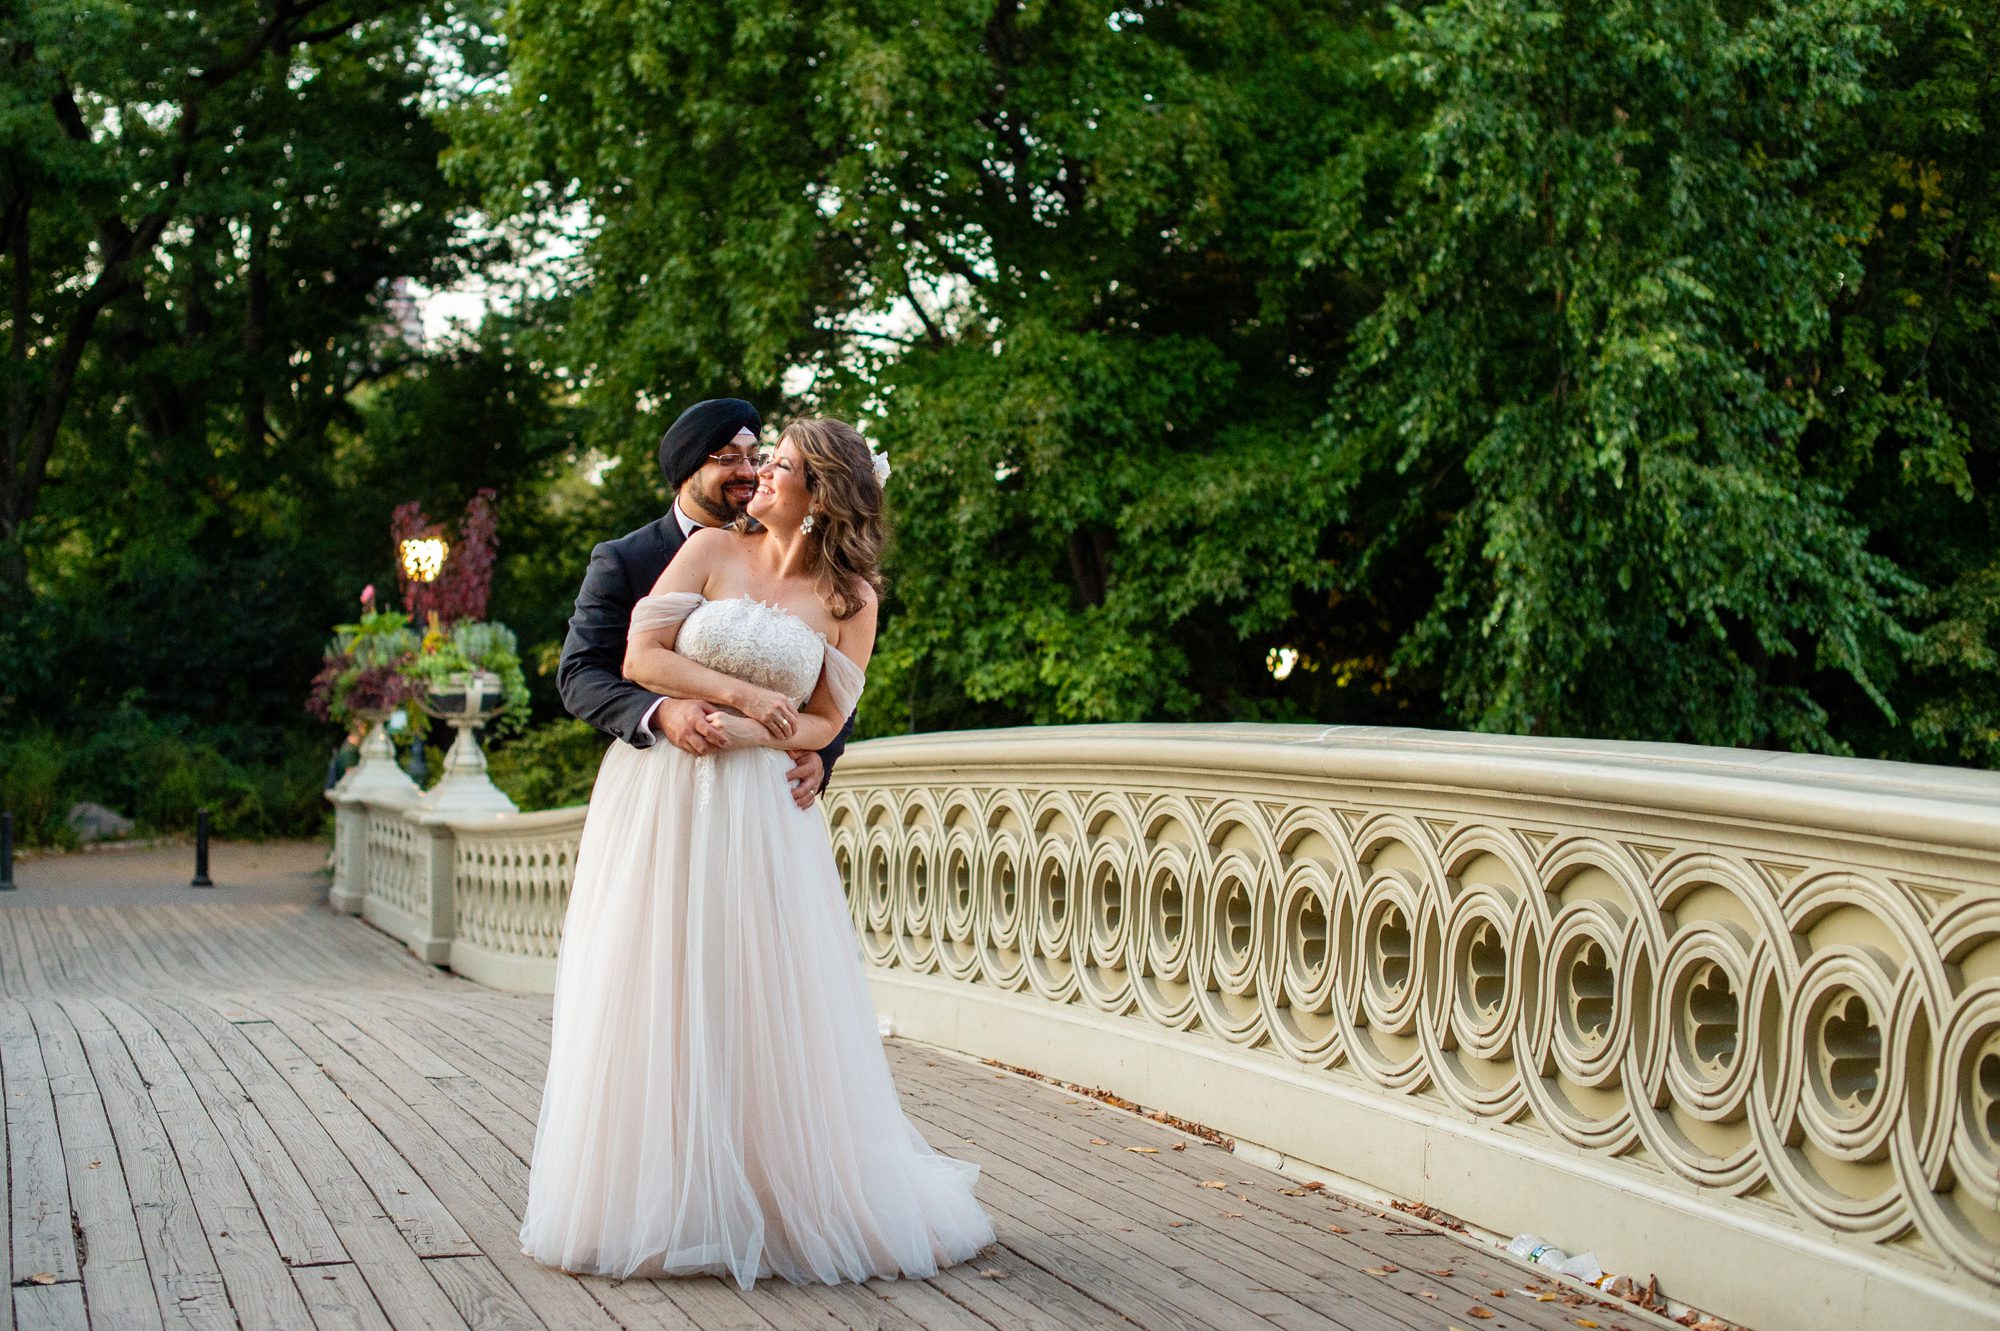 Bow Bridge Wedding Photo in Central Park